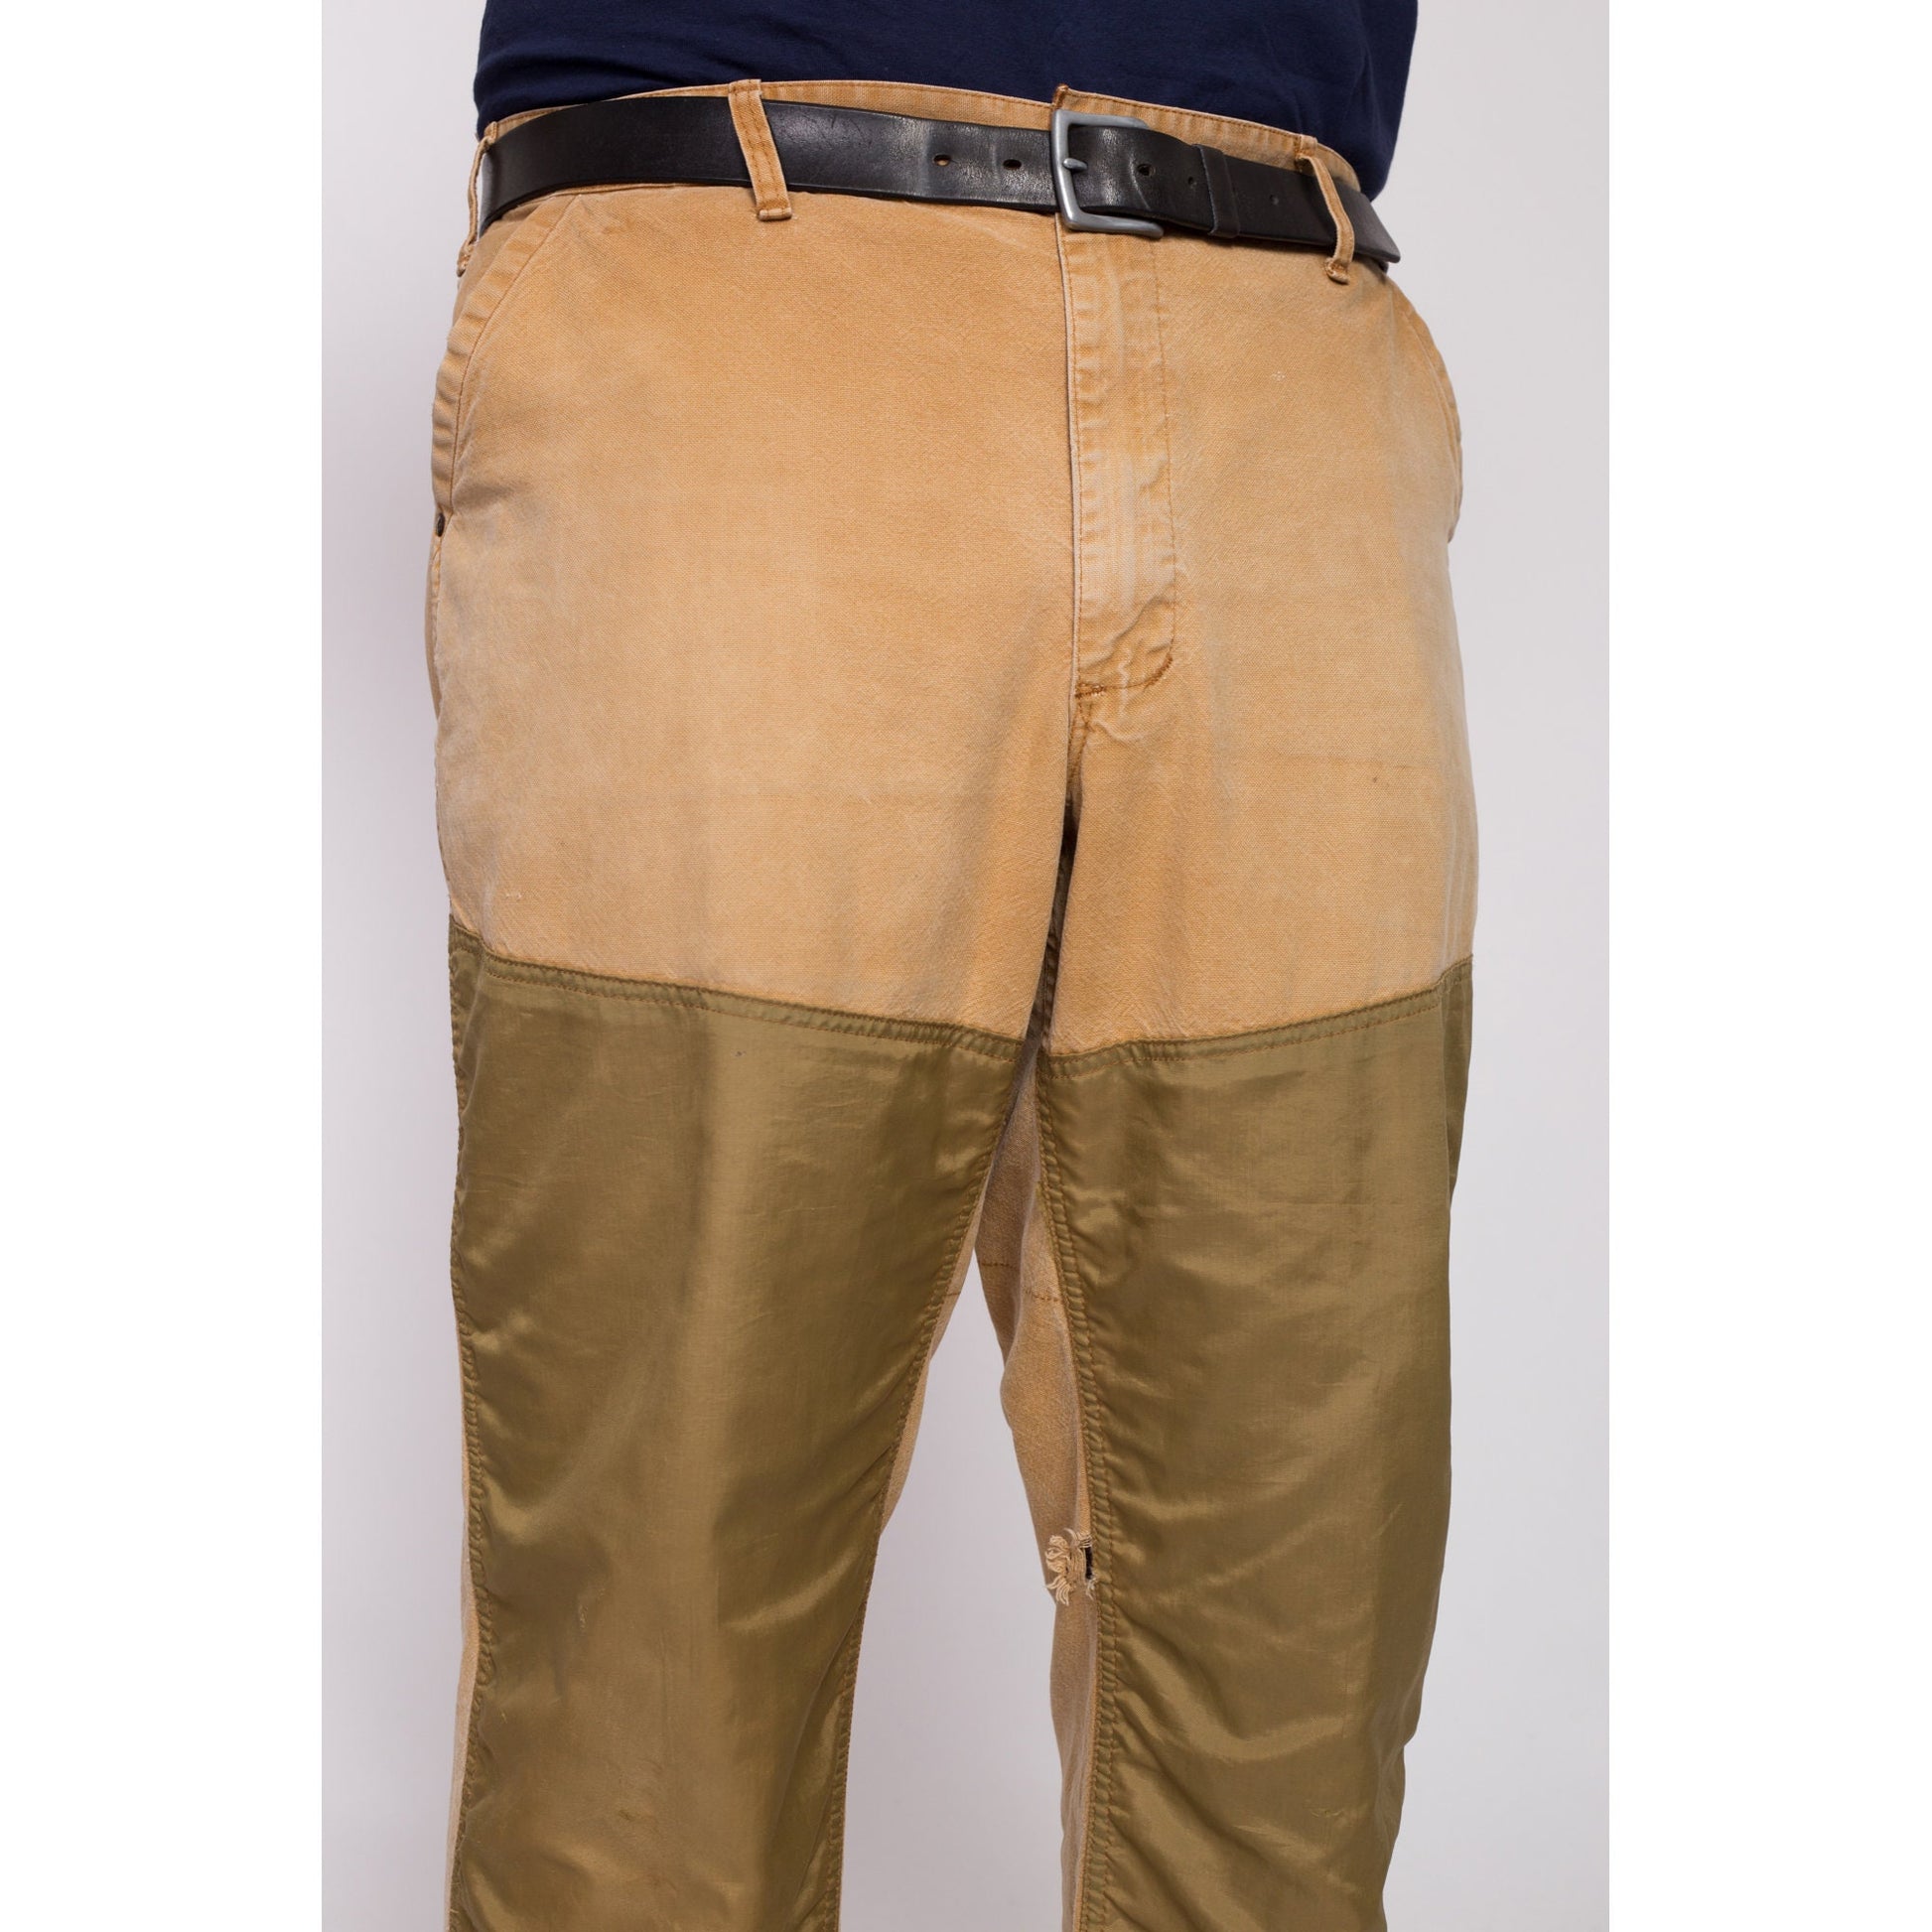 Vintage Duck Canvas Upland Hunting Pants - 41x28 | Waterproof Panel Tan Brown Workwear Outdoors Pants